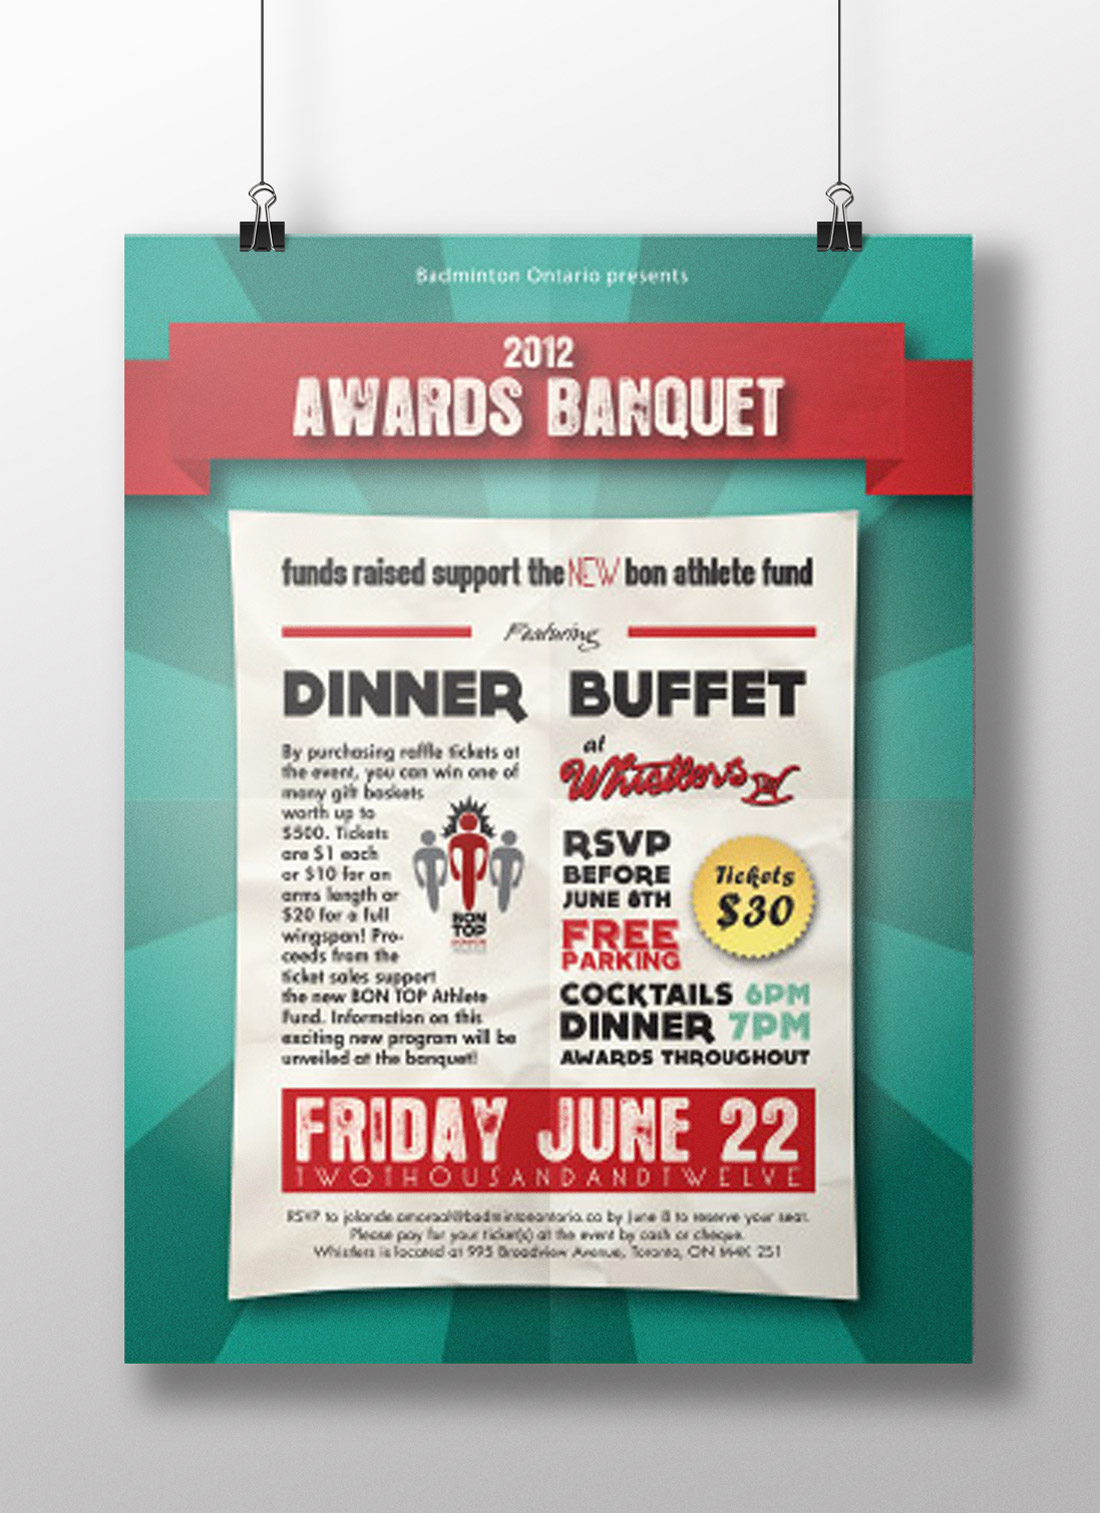 Awards-Banquet-poster.jpg